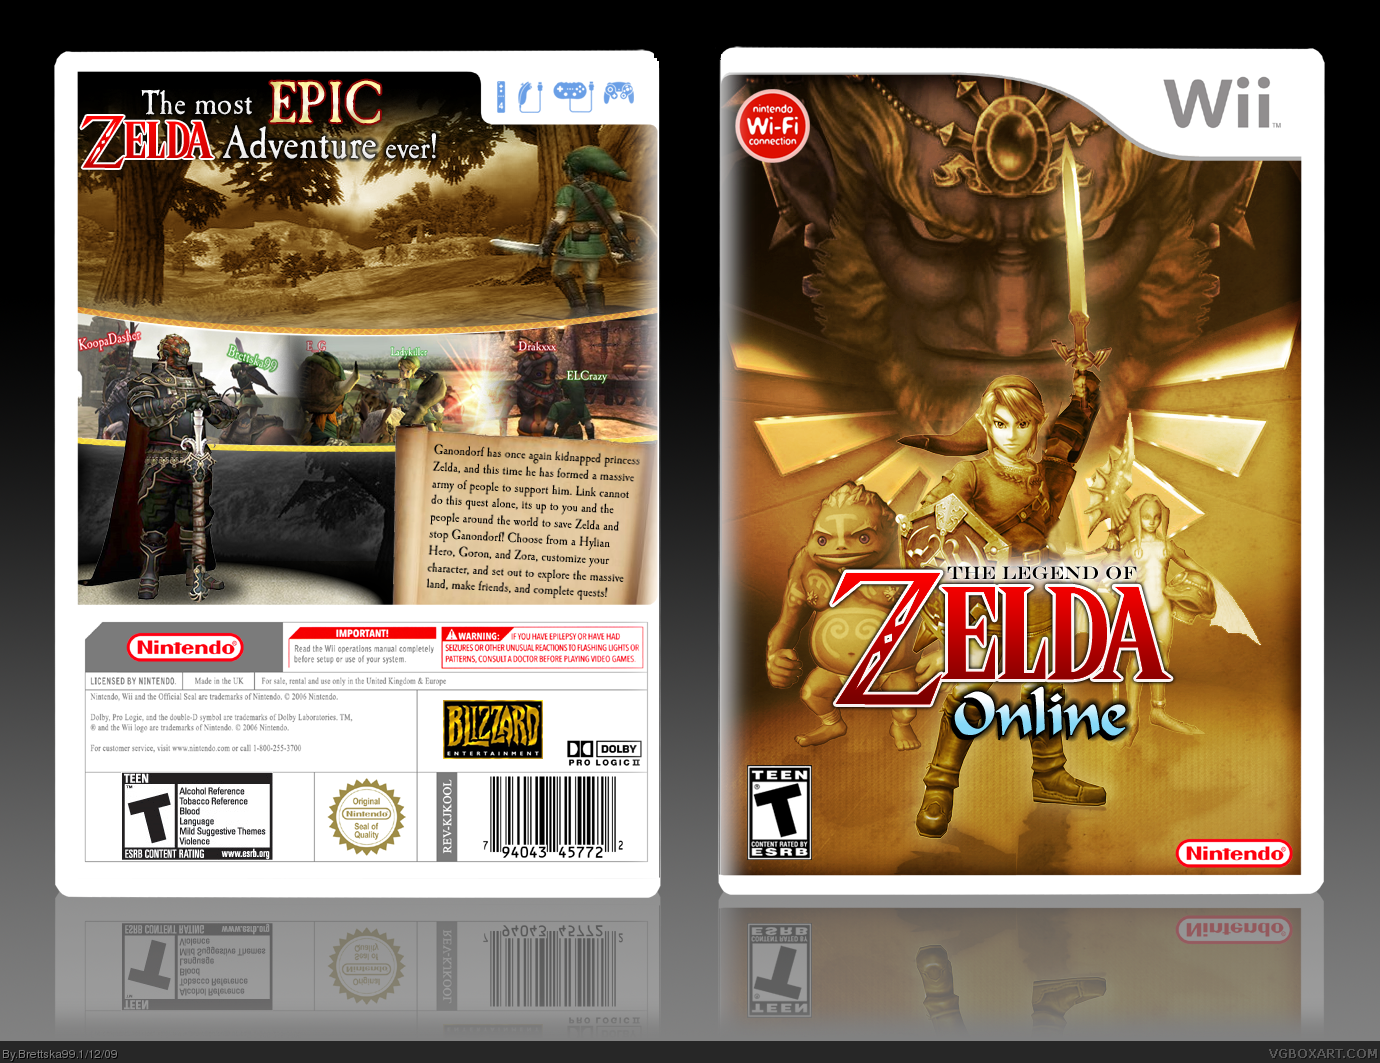 The Legend of Zelda: Online box cover